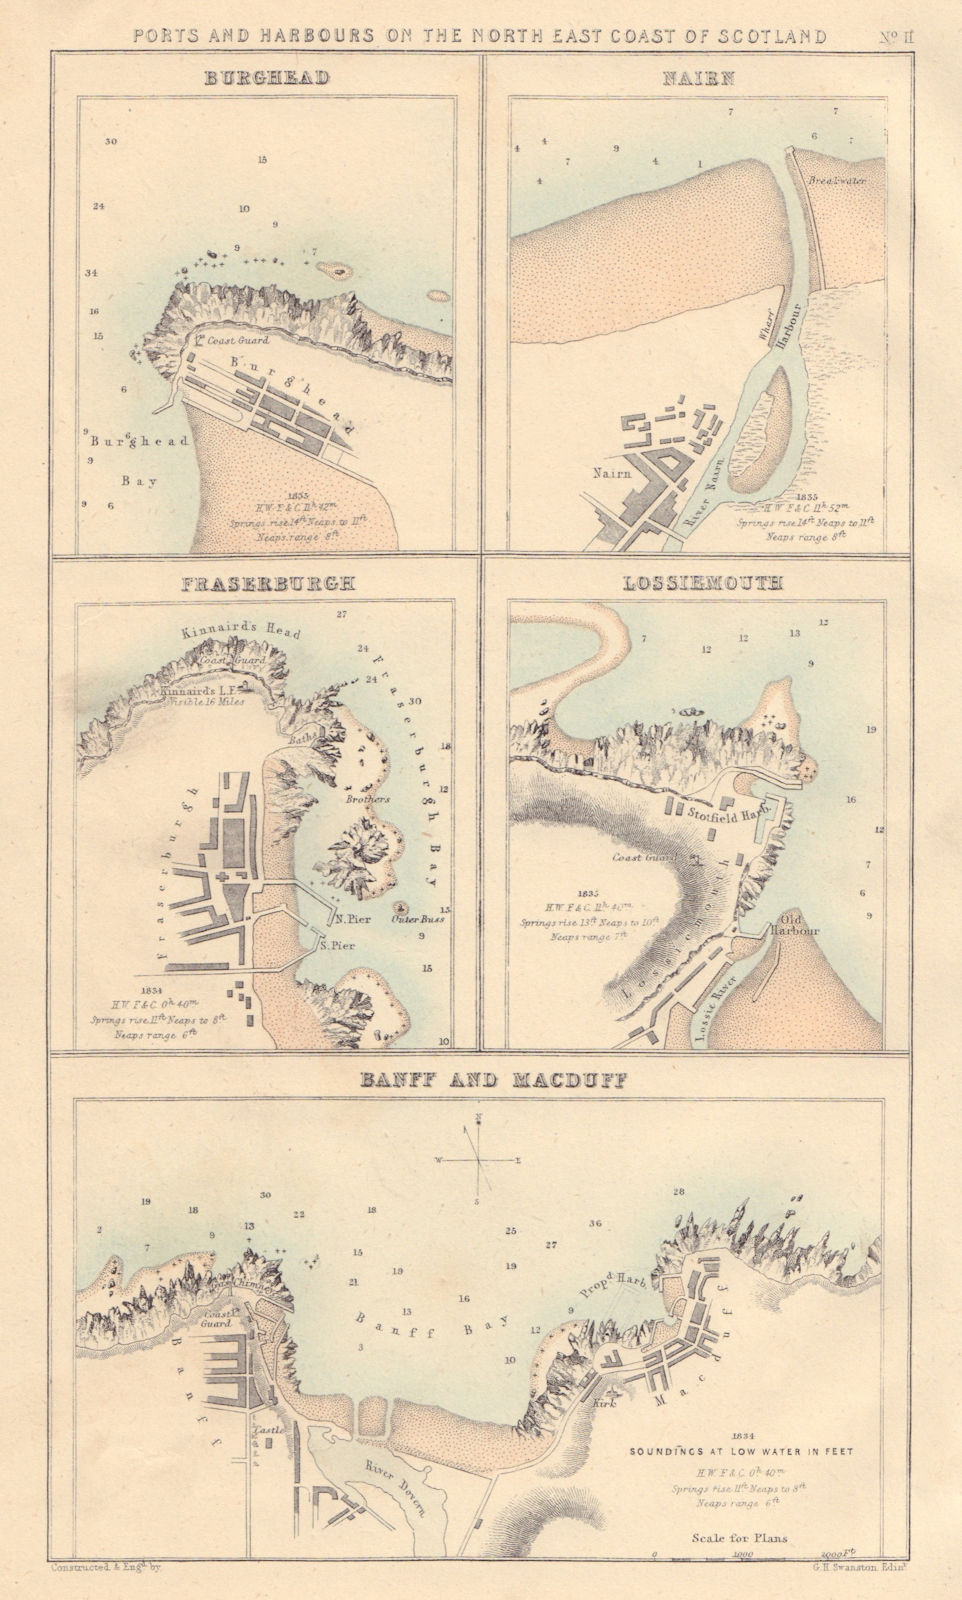 SCOTLAND NE PORTS Burghead Nairn Fraserburgh Lossiemouth Banff Macduff 1866 map